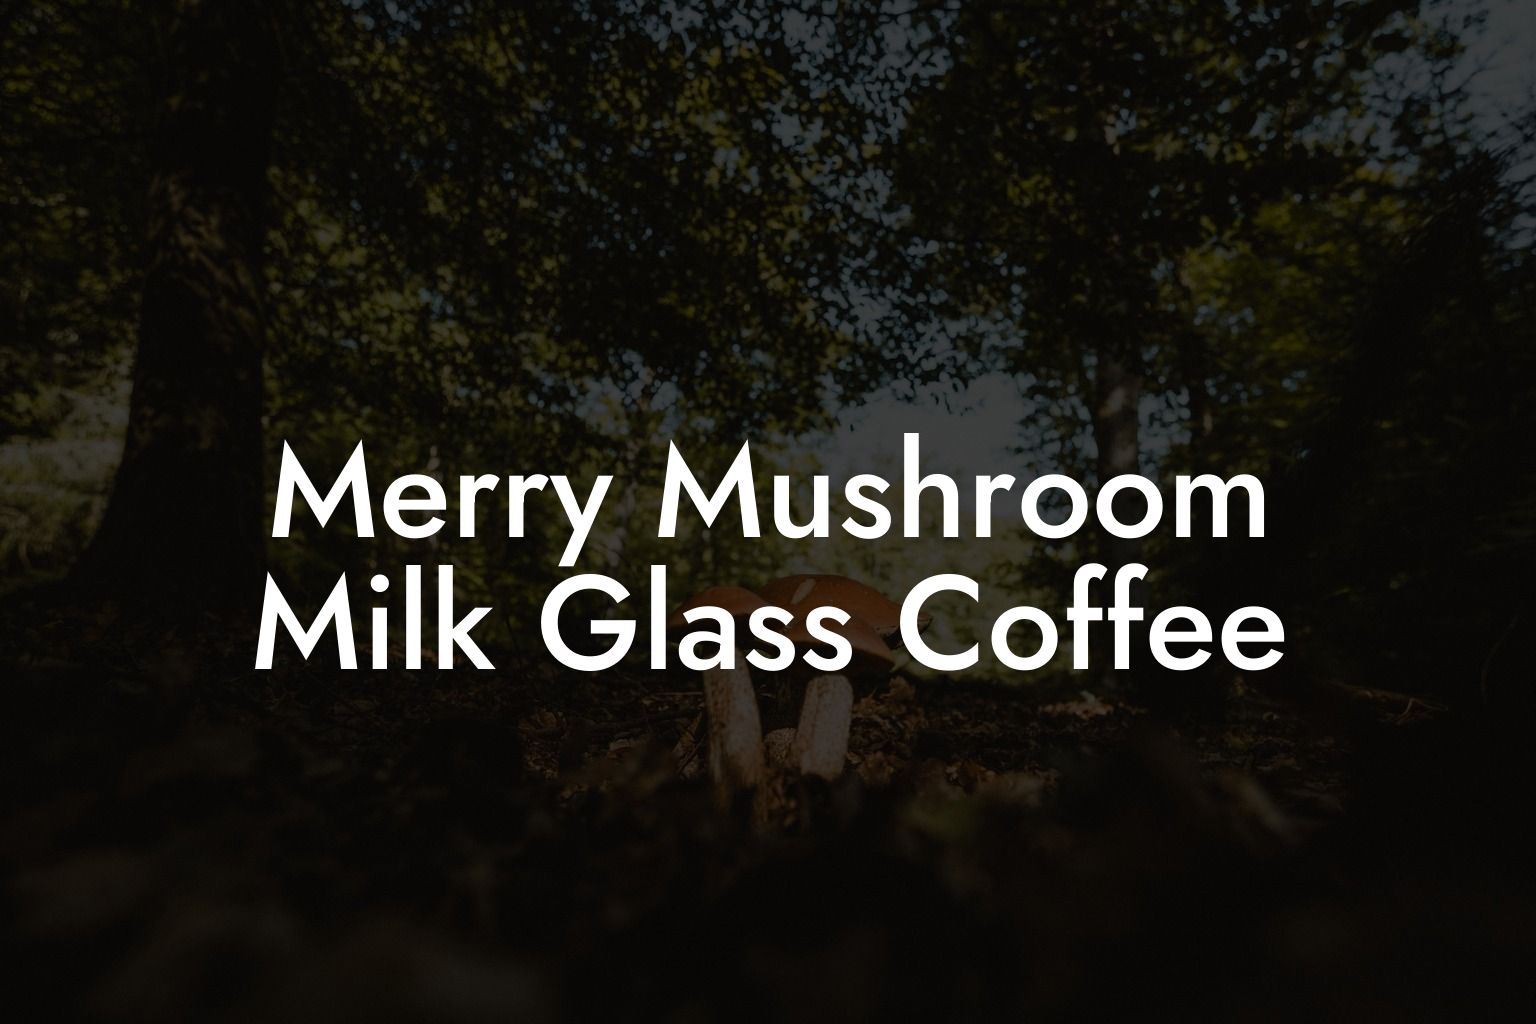 Merry Mushroom Milk Glass Coffee